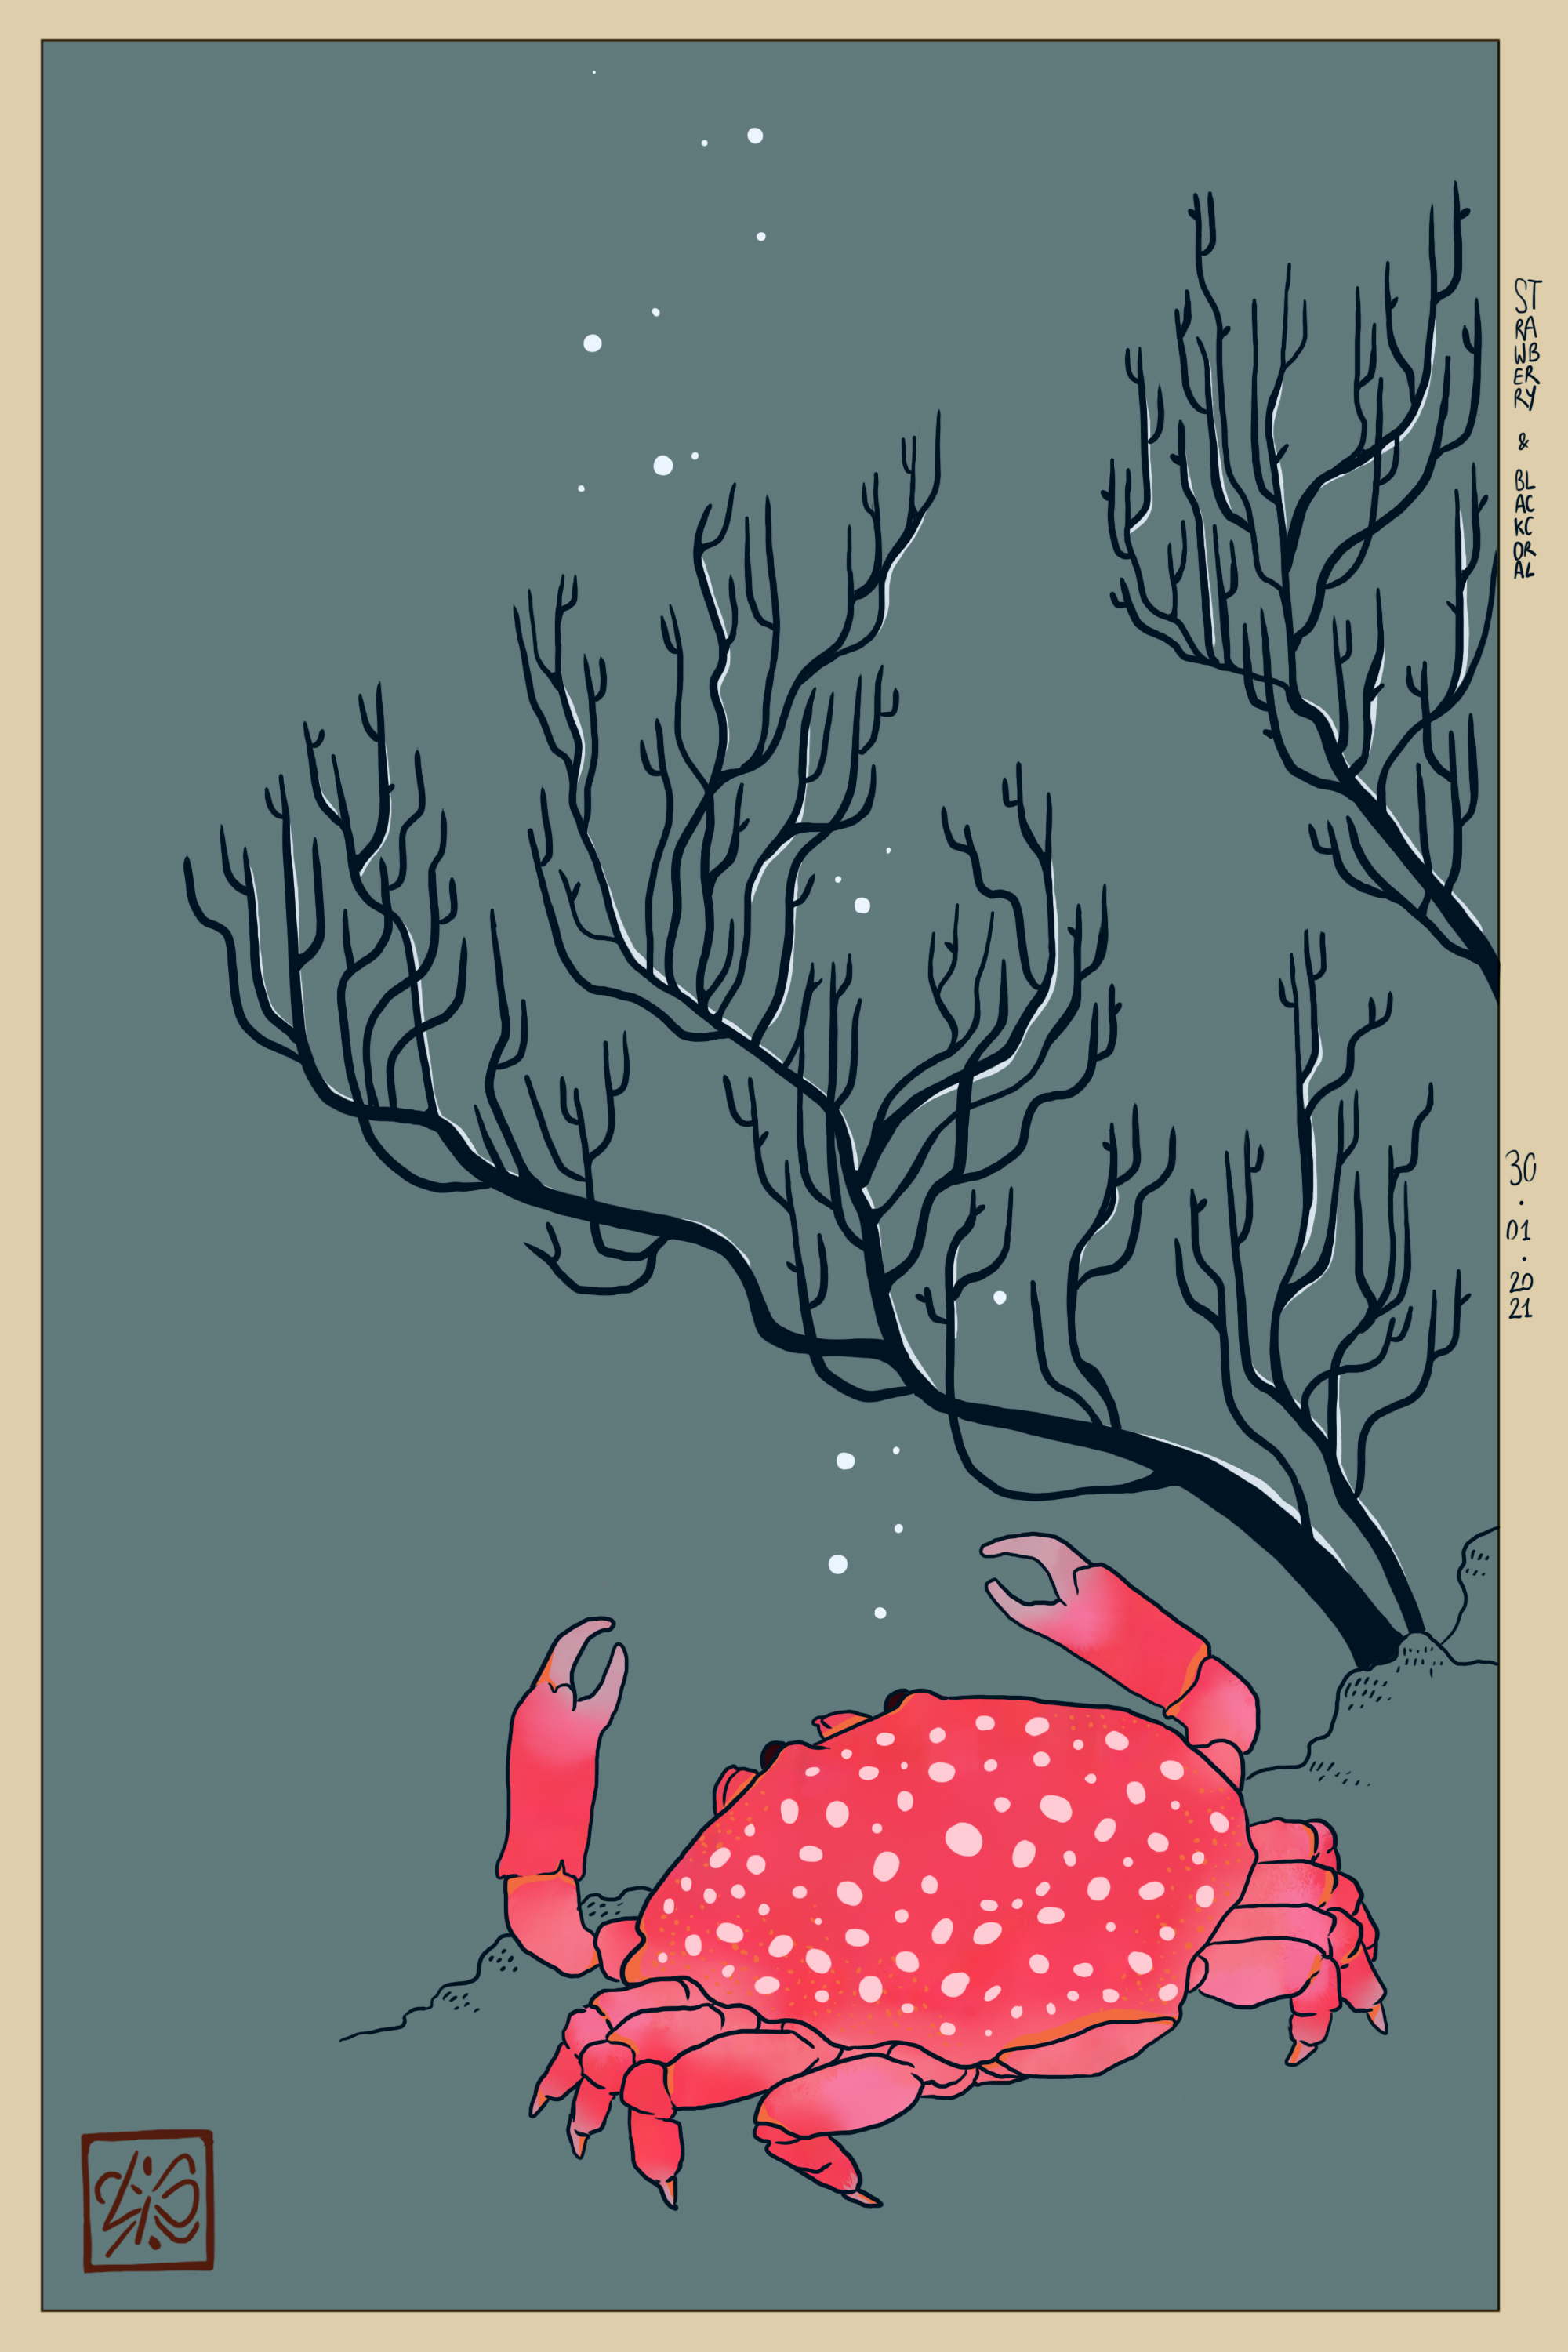 Strawberry crab